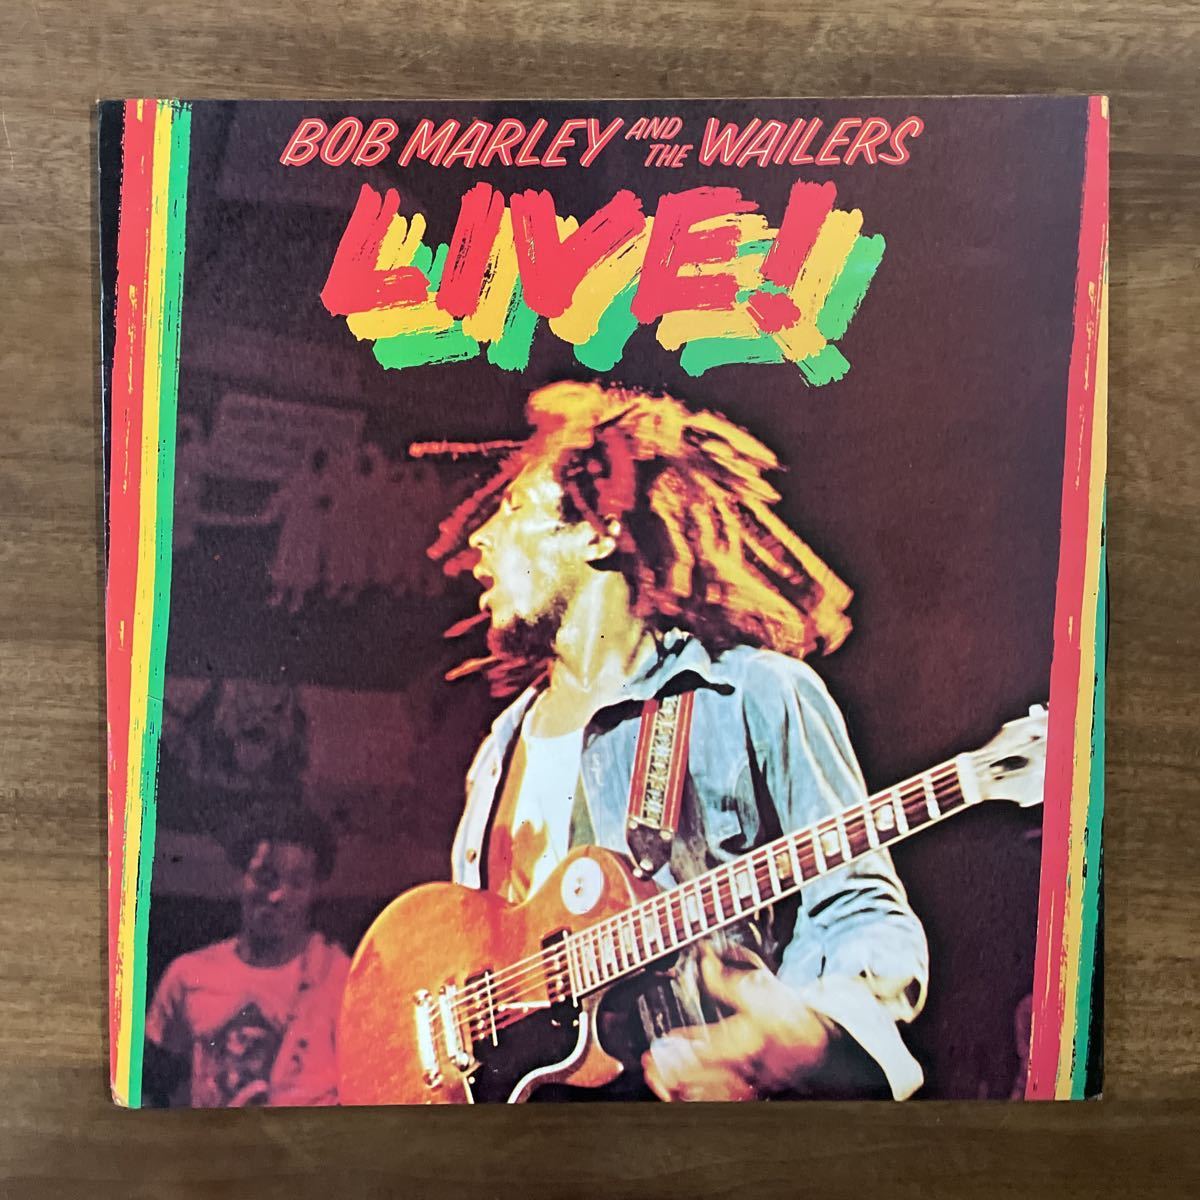  Reggae BOB MARLEY AND THE WAILERS LIVE! запись 